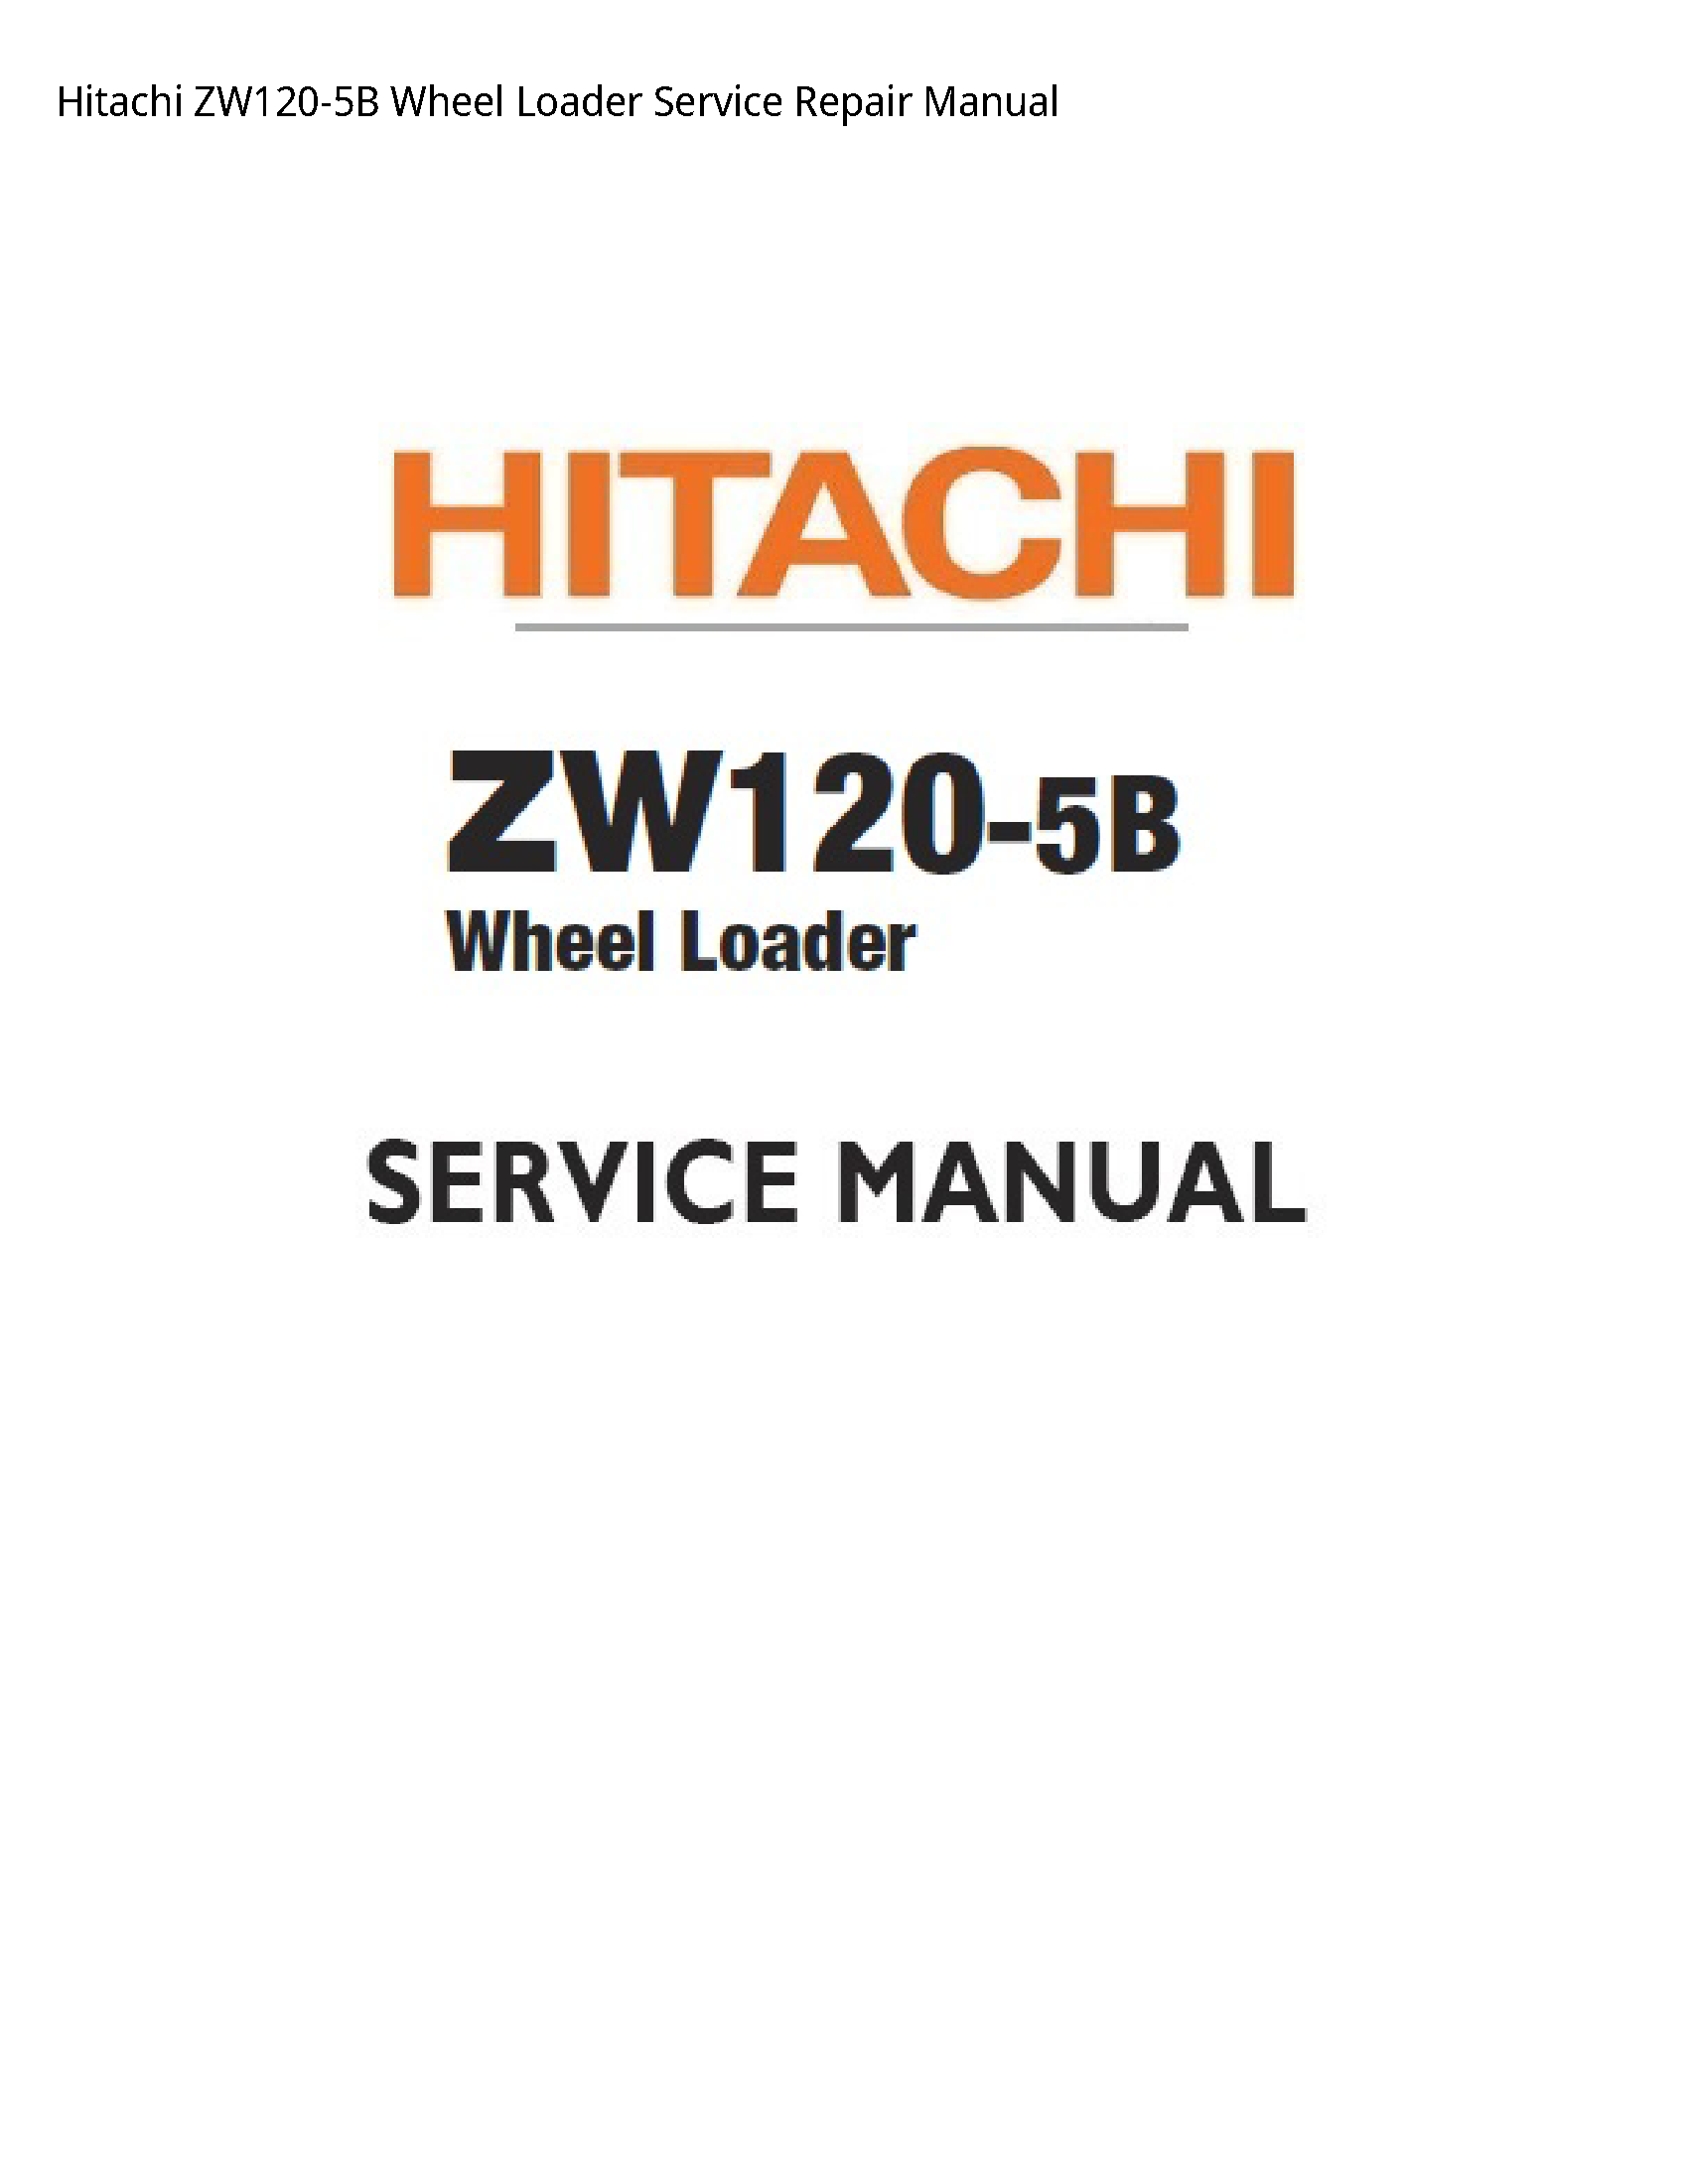 Hitachi ZW120-5B Wheel Loader manual